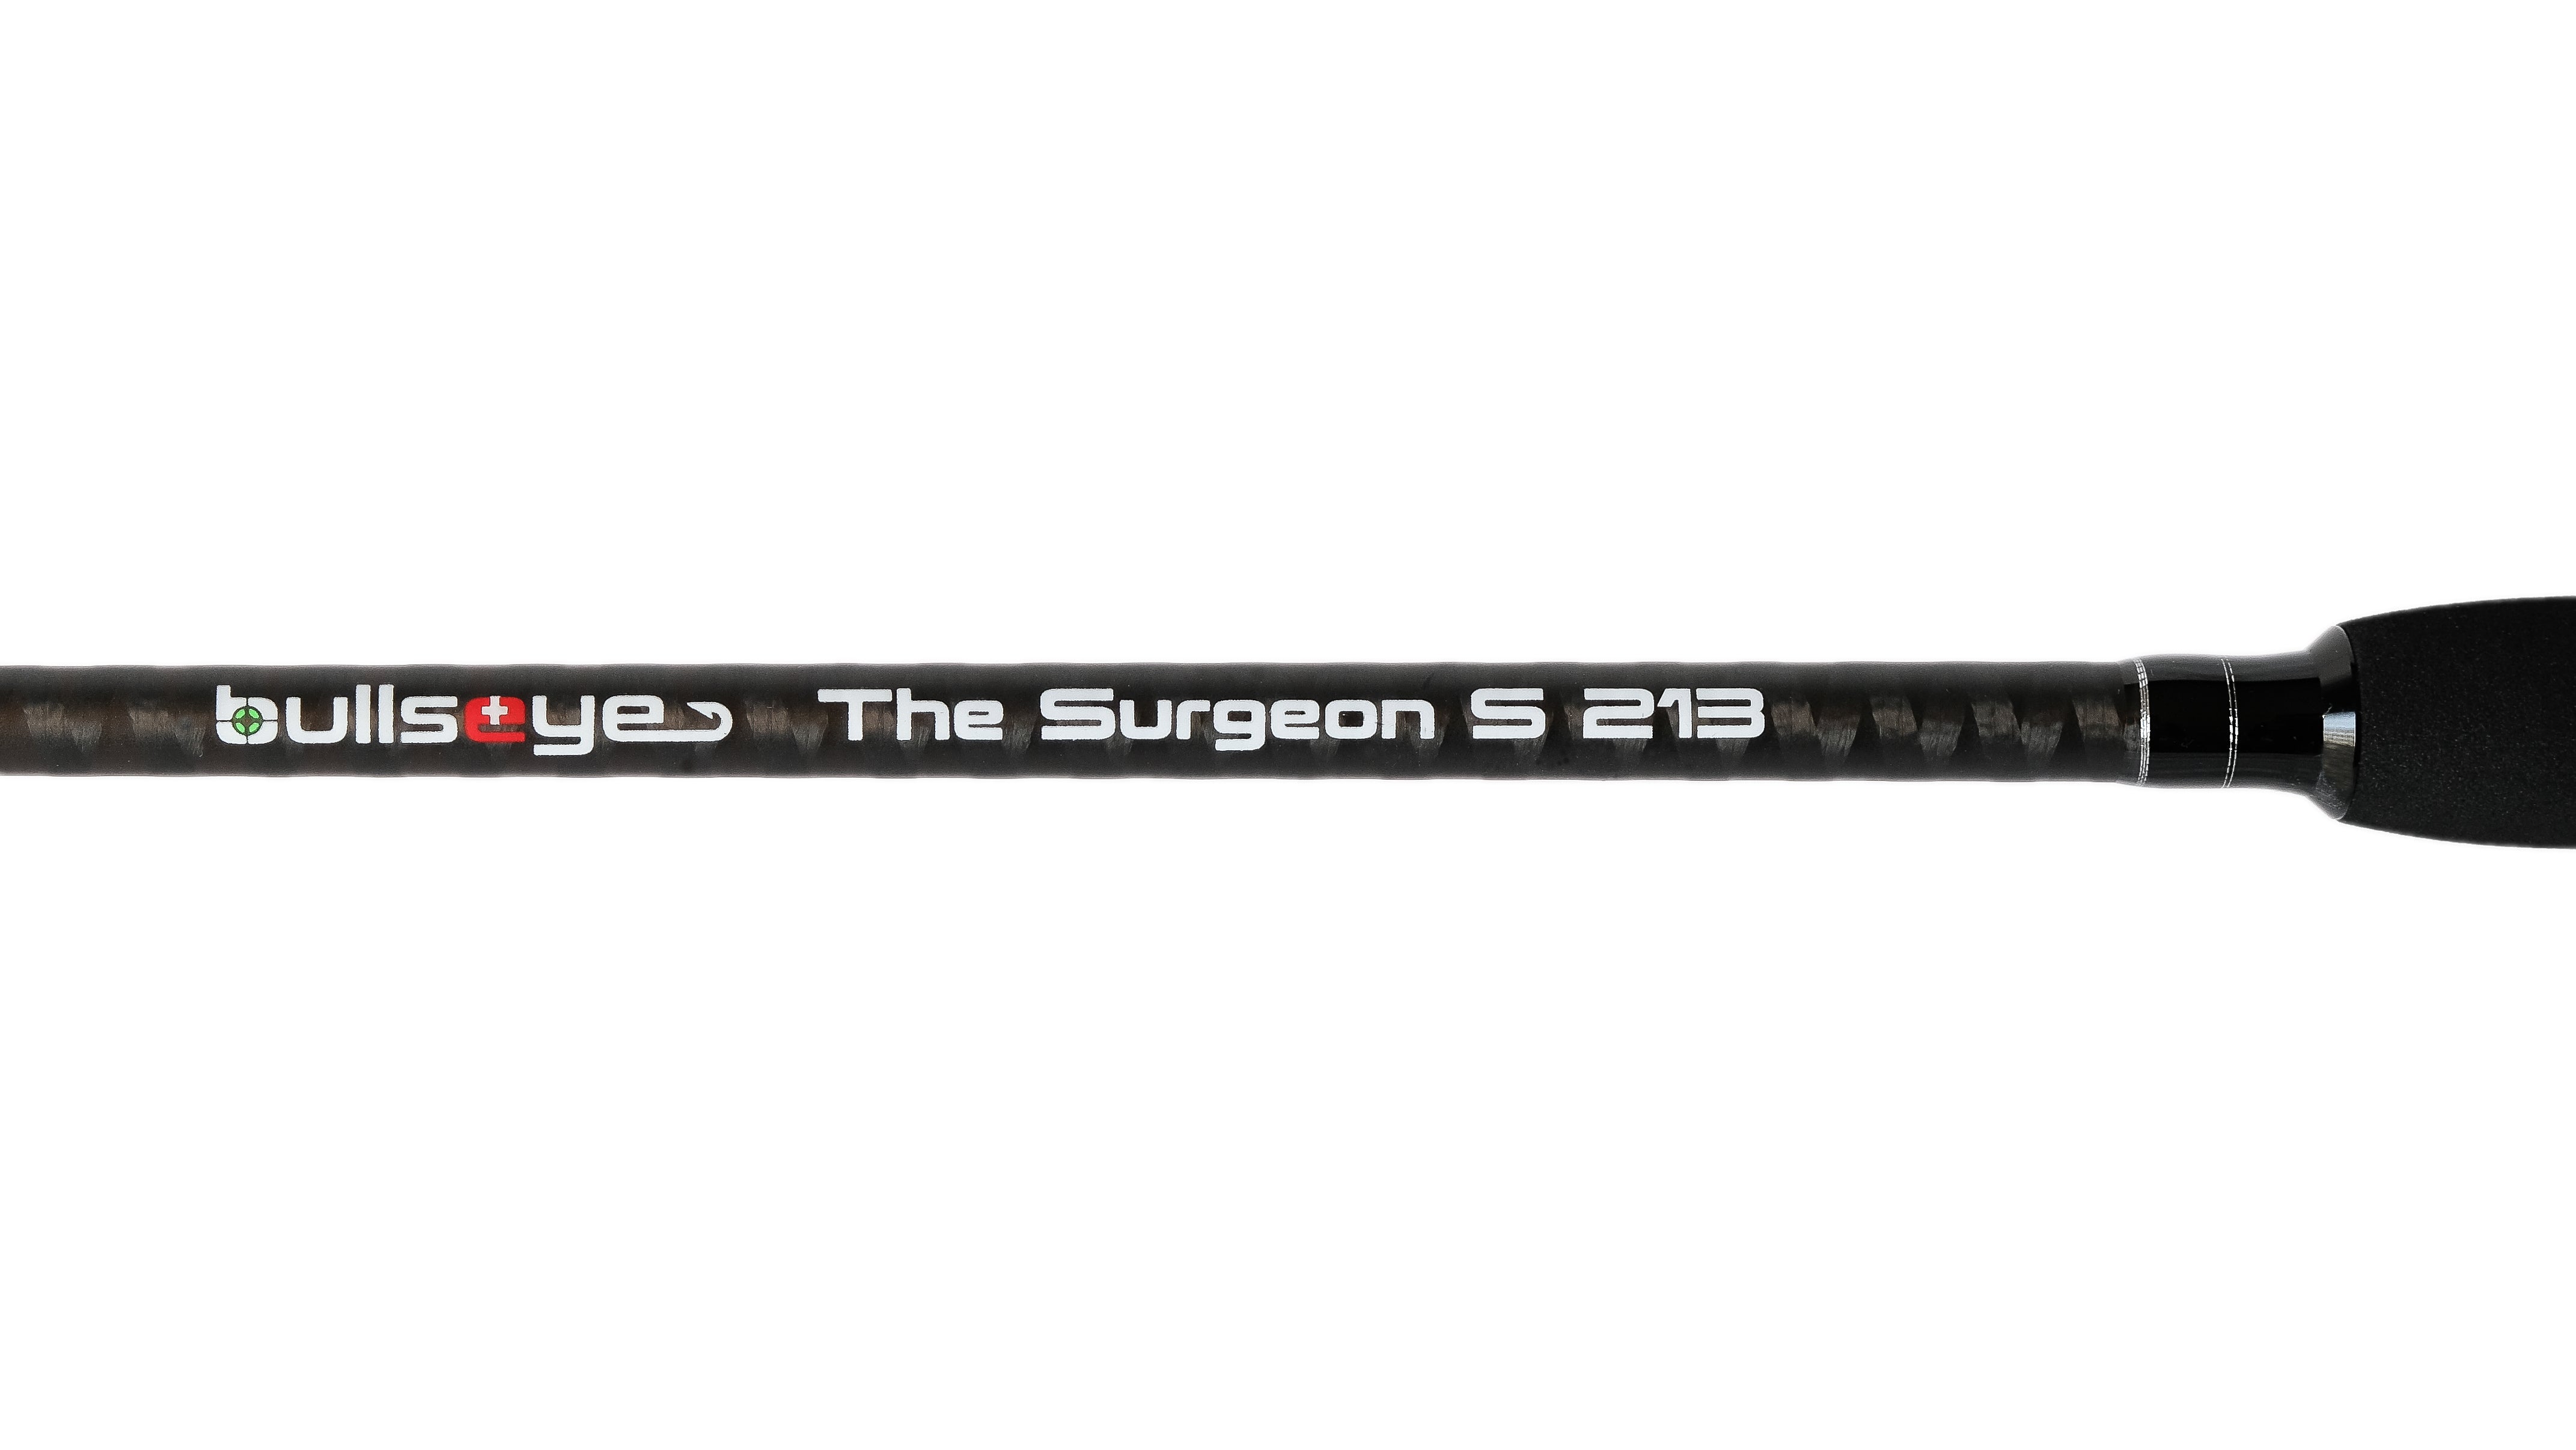 Bullseye Surgeon 213 2-14g